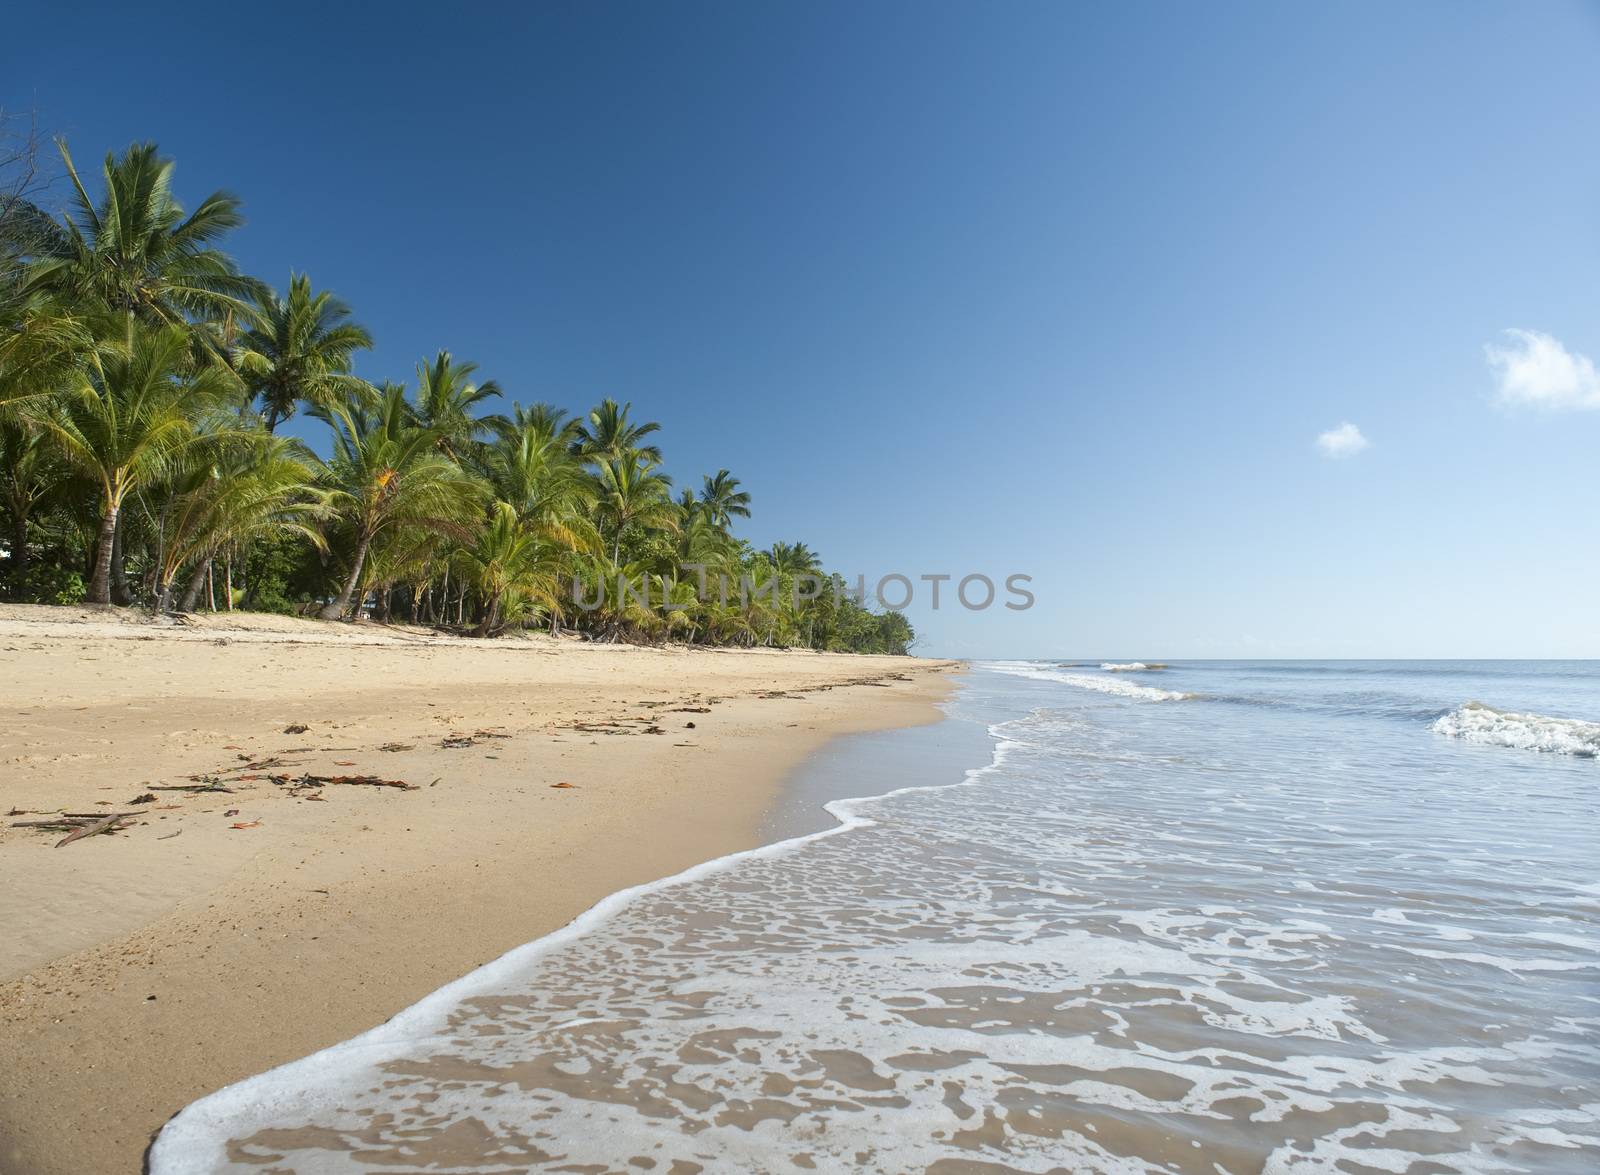 Idyllic tropical getaway at Mission Beach by stockarch